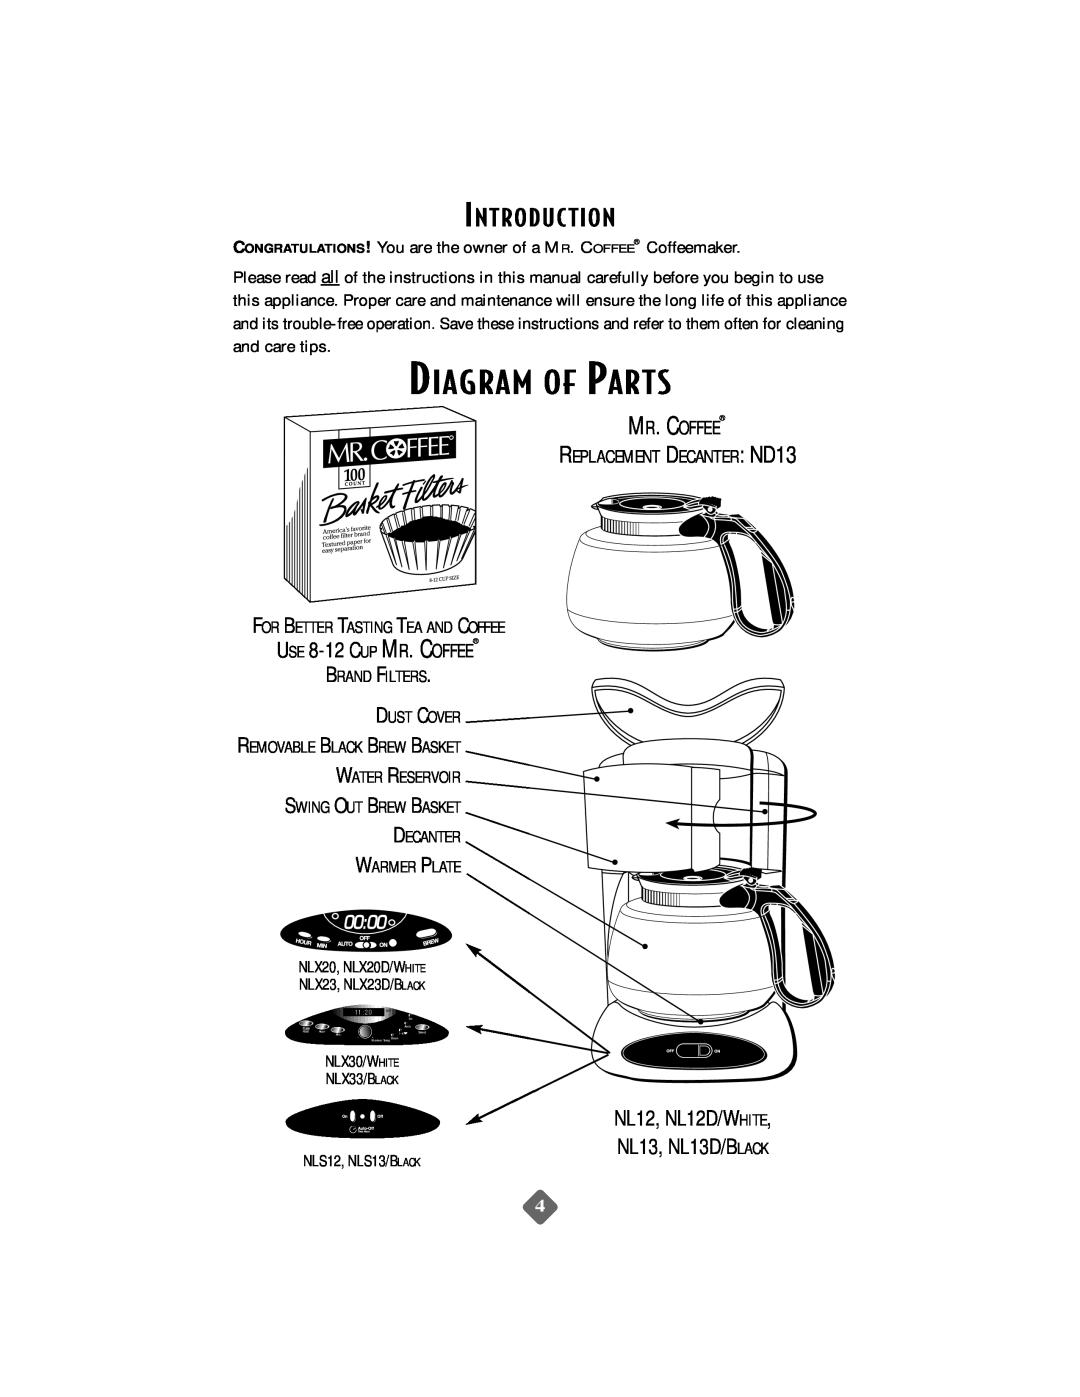 Mr. Coffee NLS12 instruction manual Diagram Of Parts, Introduc Tion, USE 8-12 CUP MR. COFFEE, Mr. Coffee 